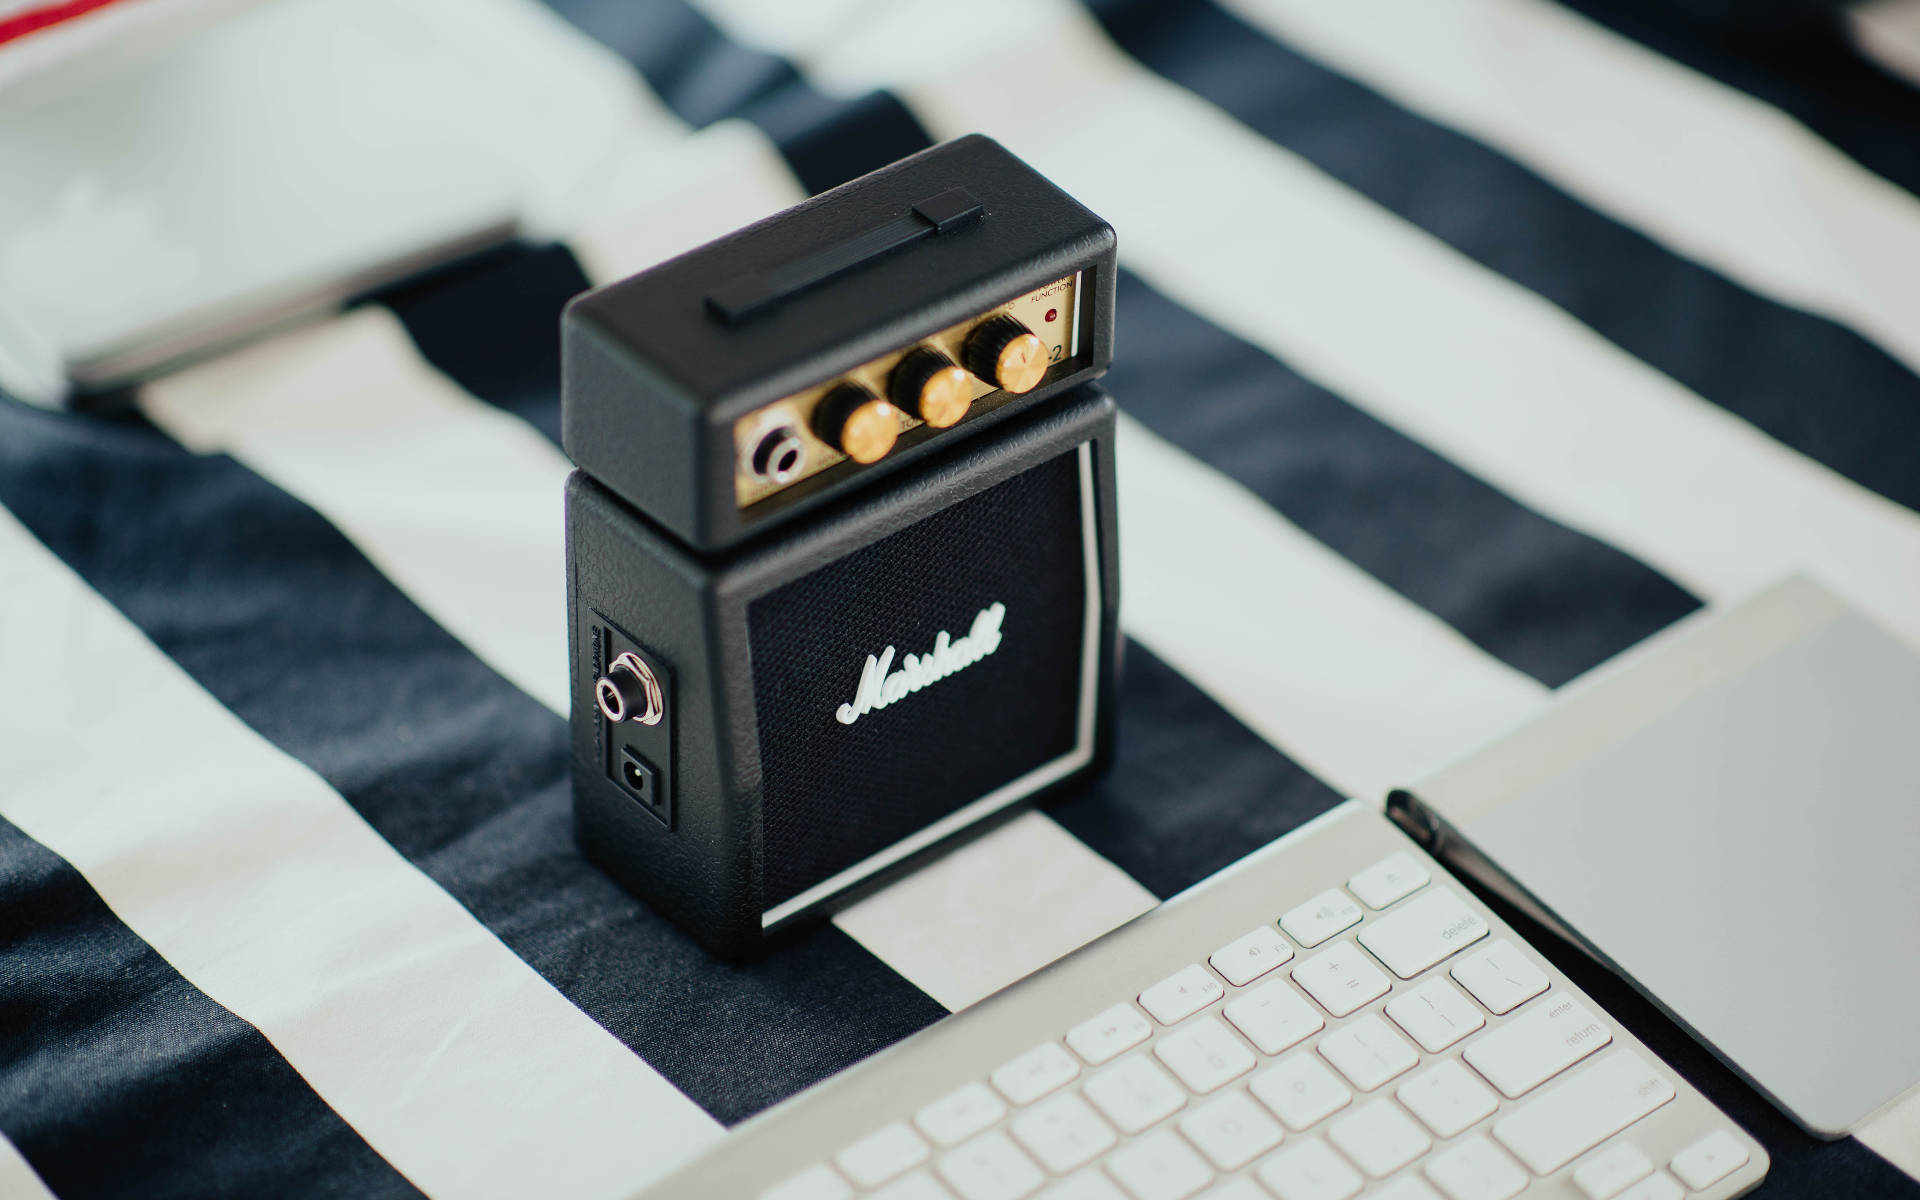 Mini Marshall Amplifier Near Keyboard Background